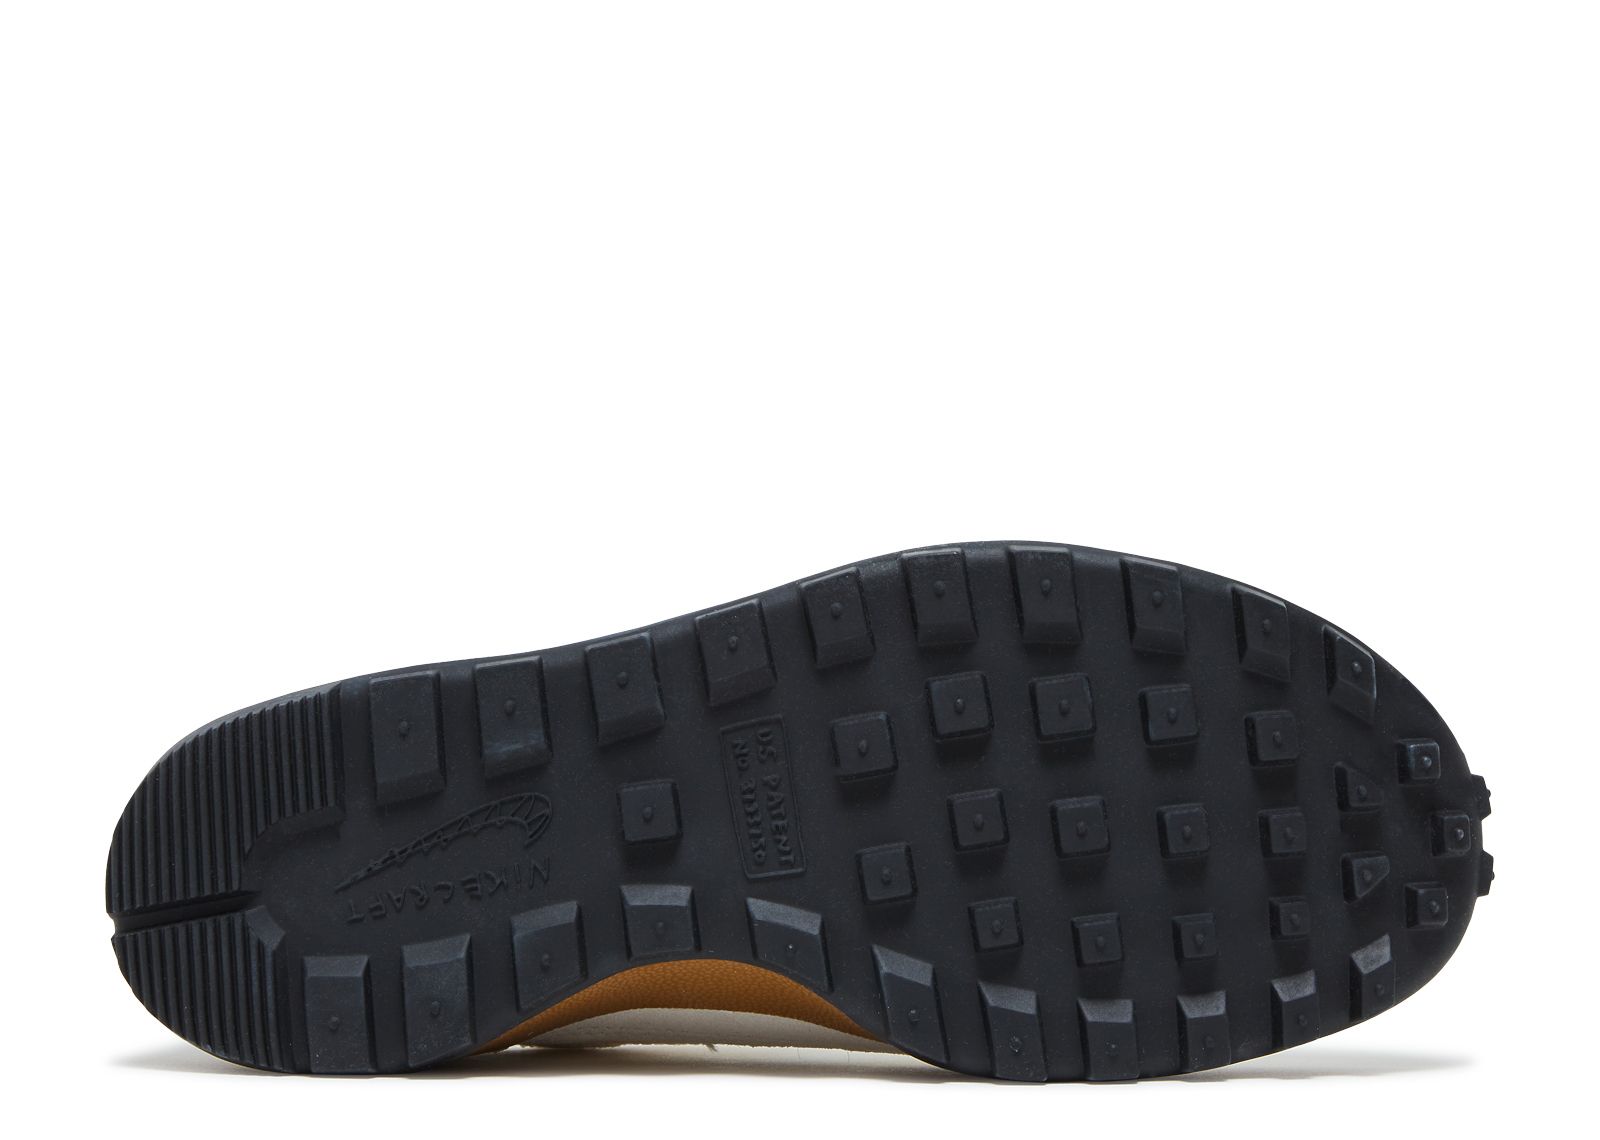 NikeCraft General Purpose Shoe Tom Sachs - DA6672-200 - US